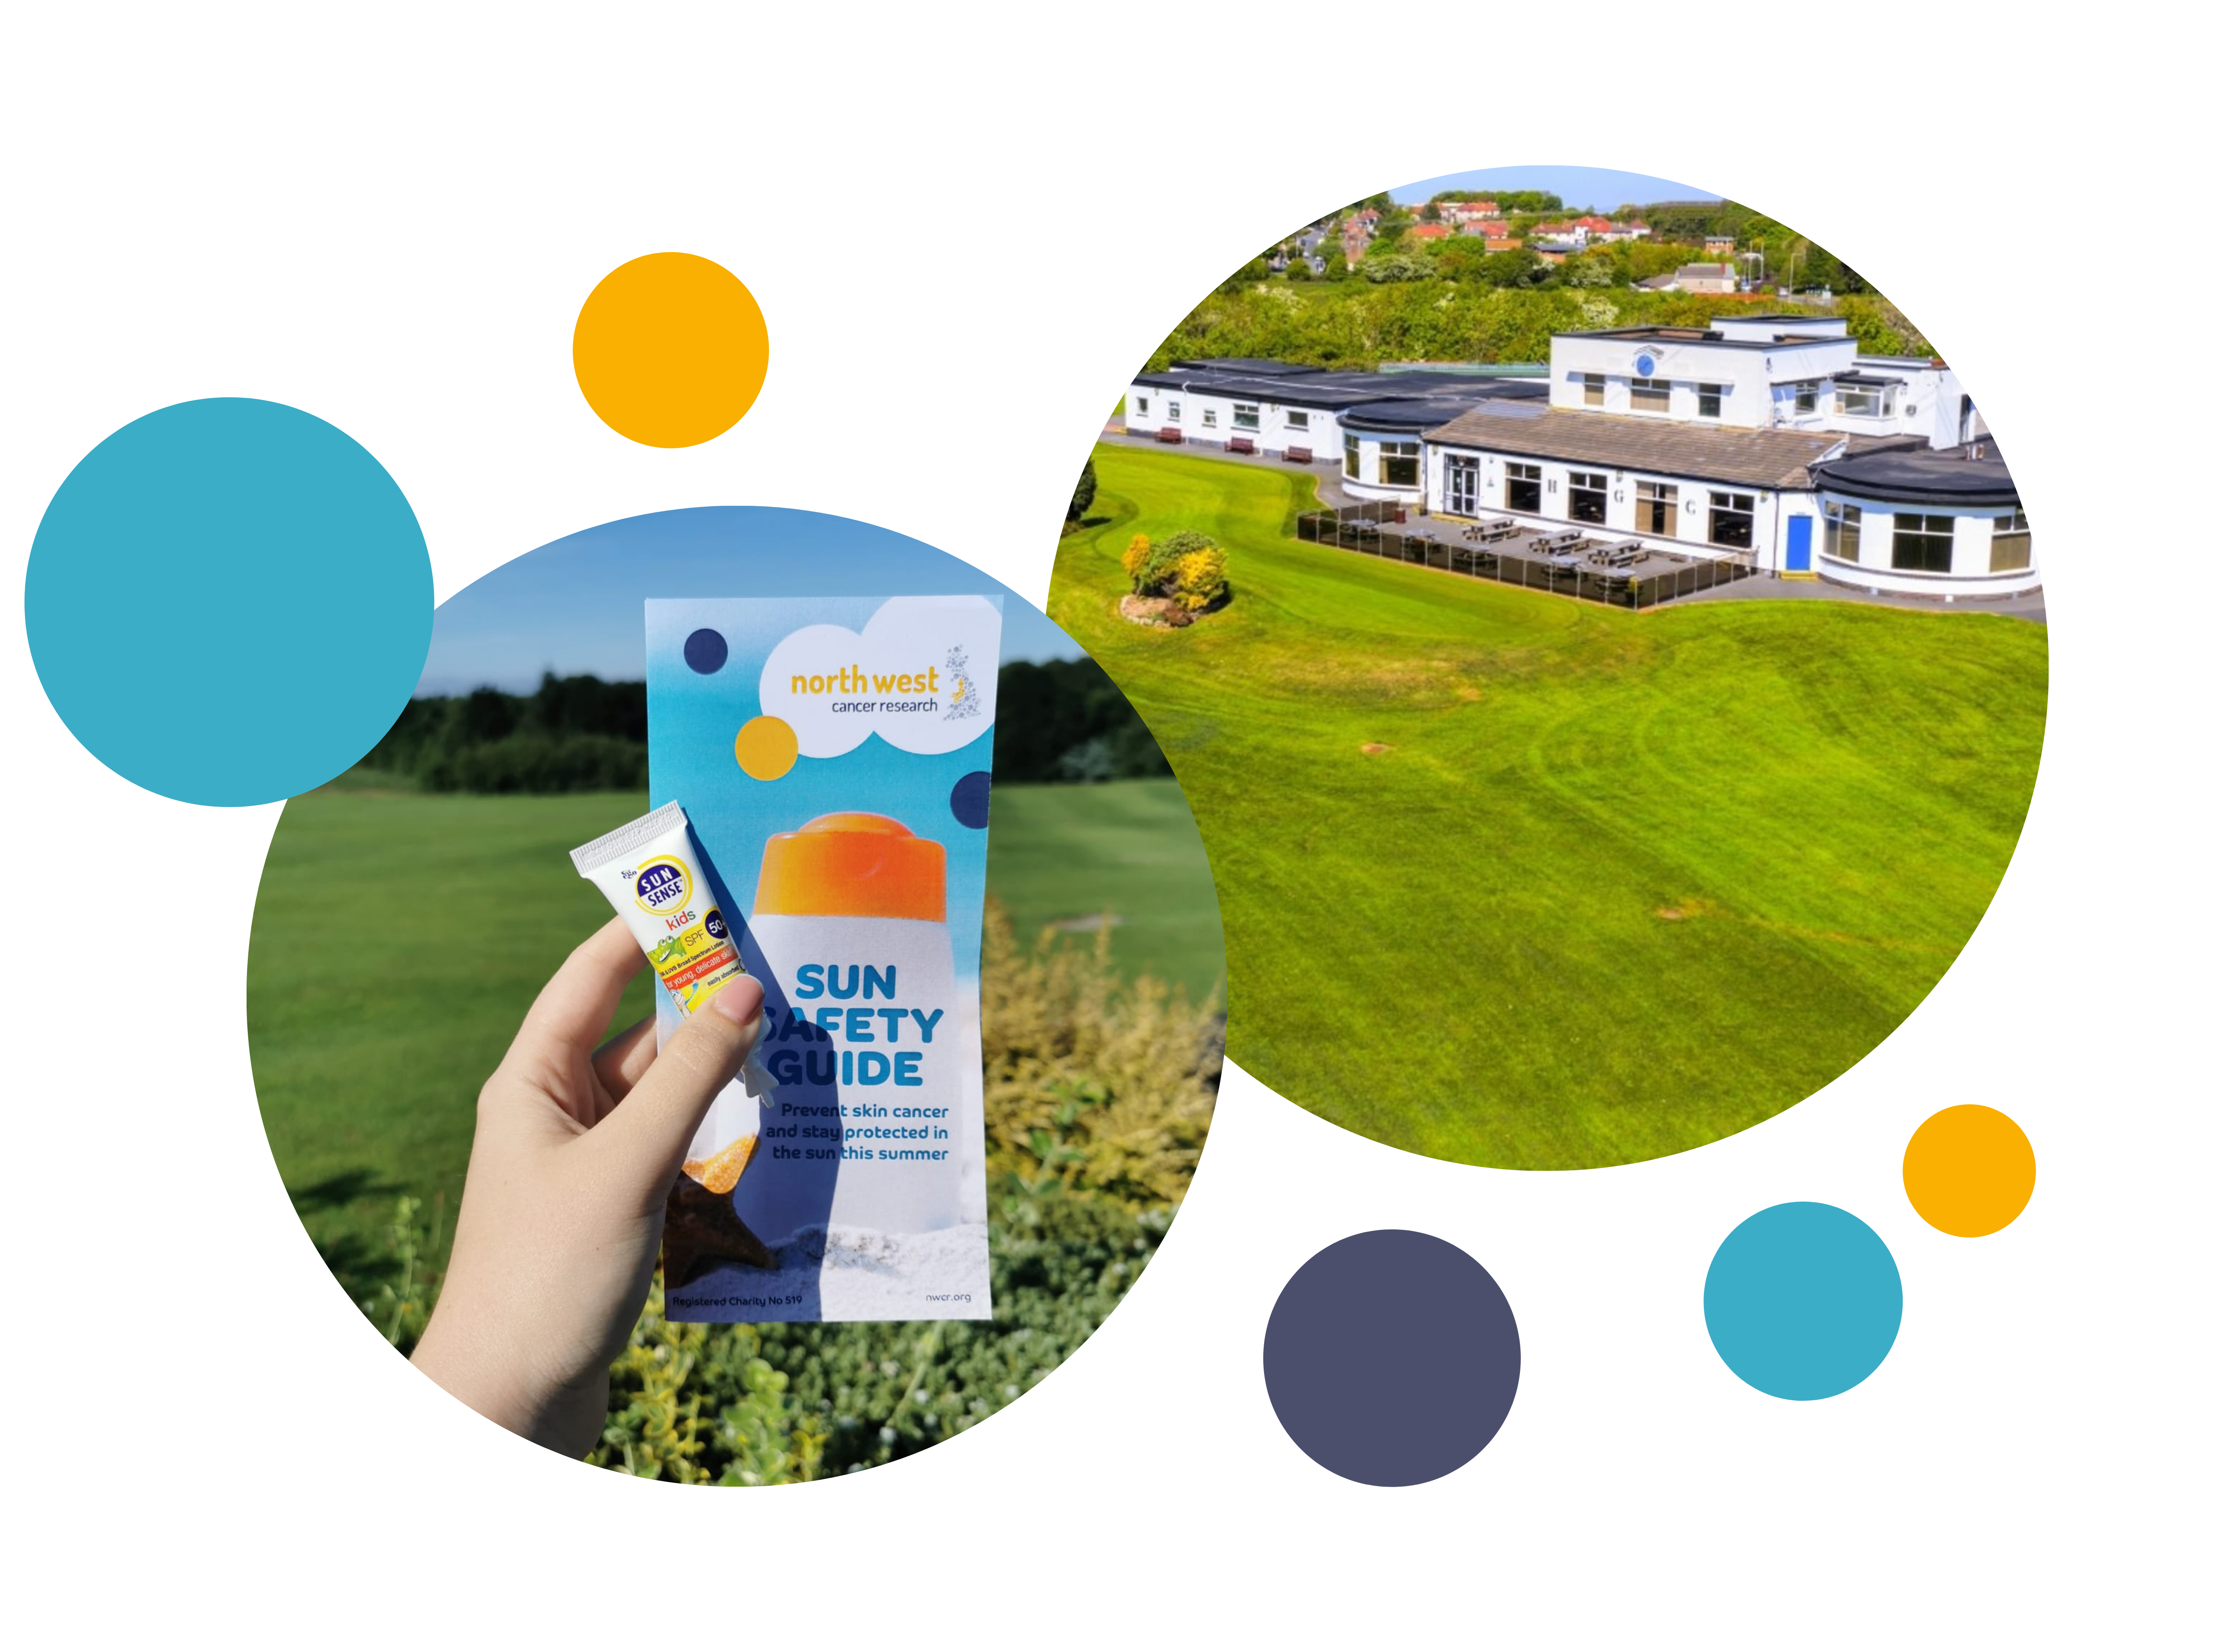 sun cream samples at Heysham Golf Club 